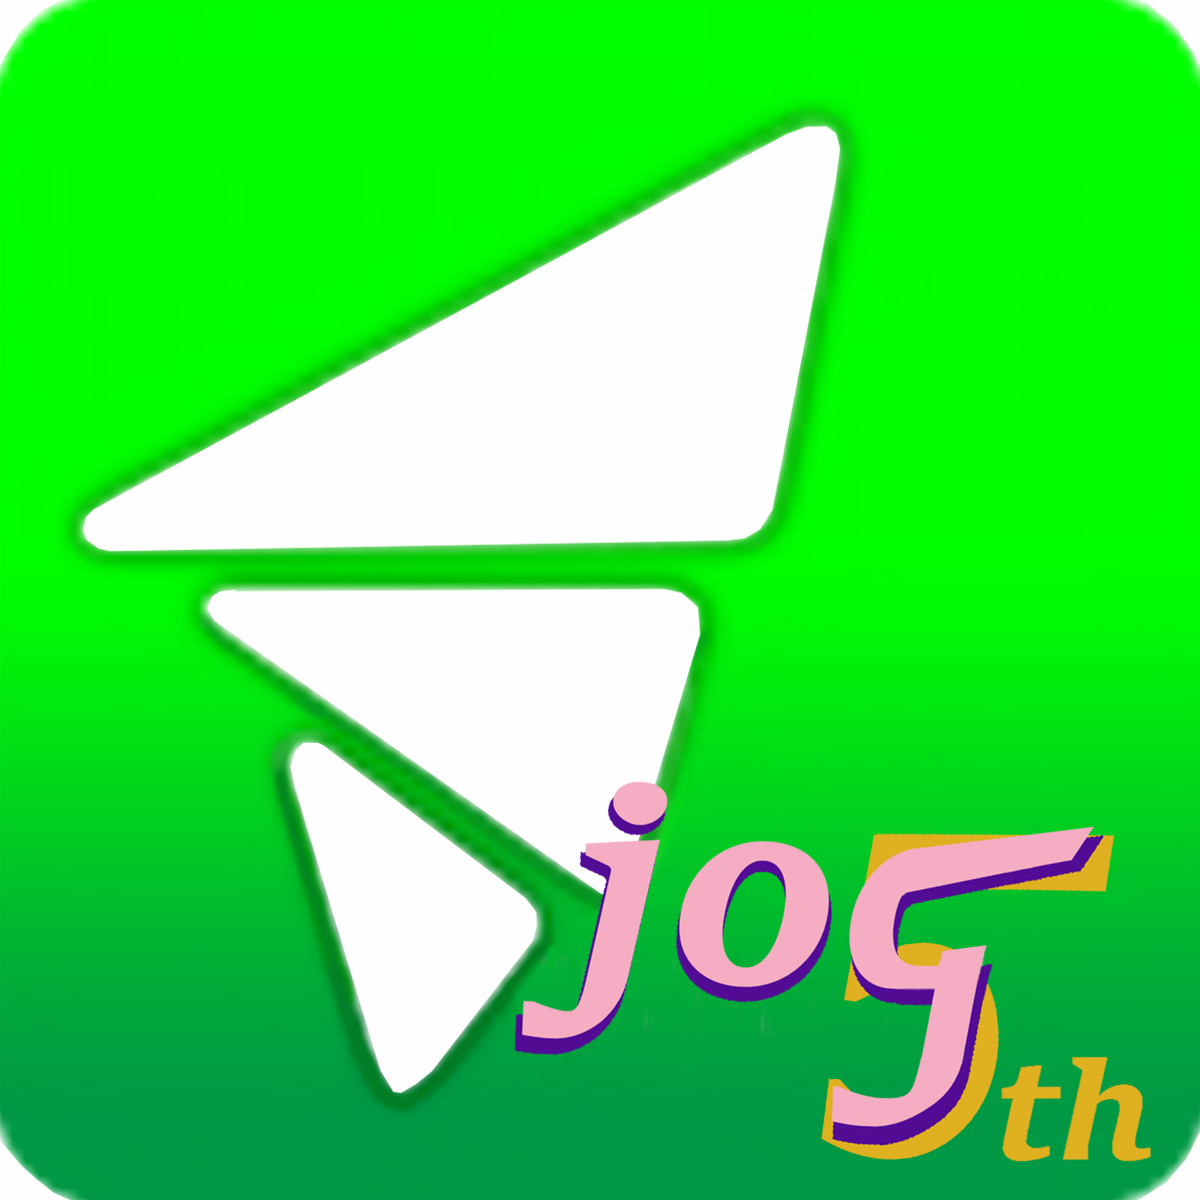 Anhang JOG 5th icon.jpg